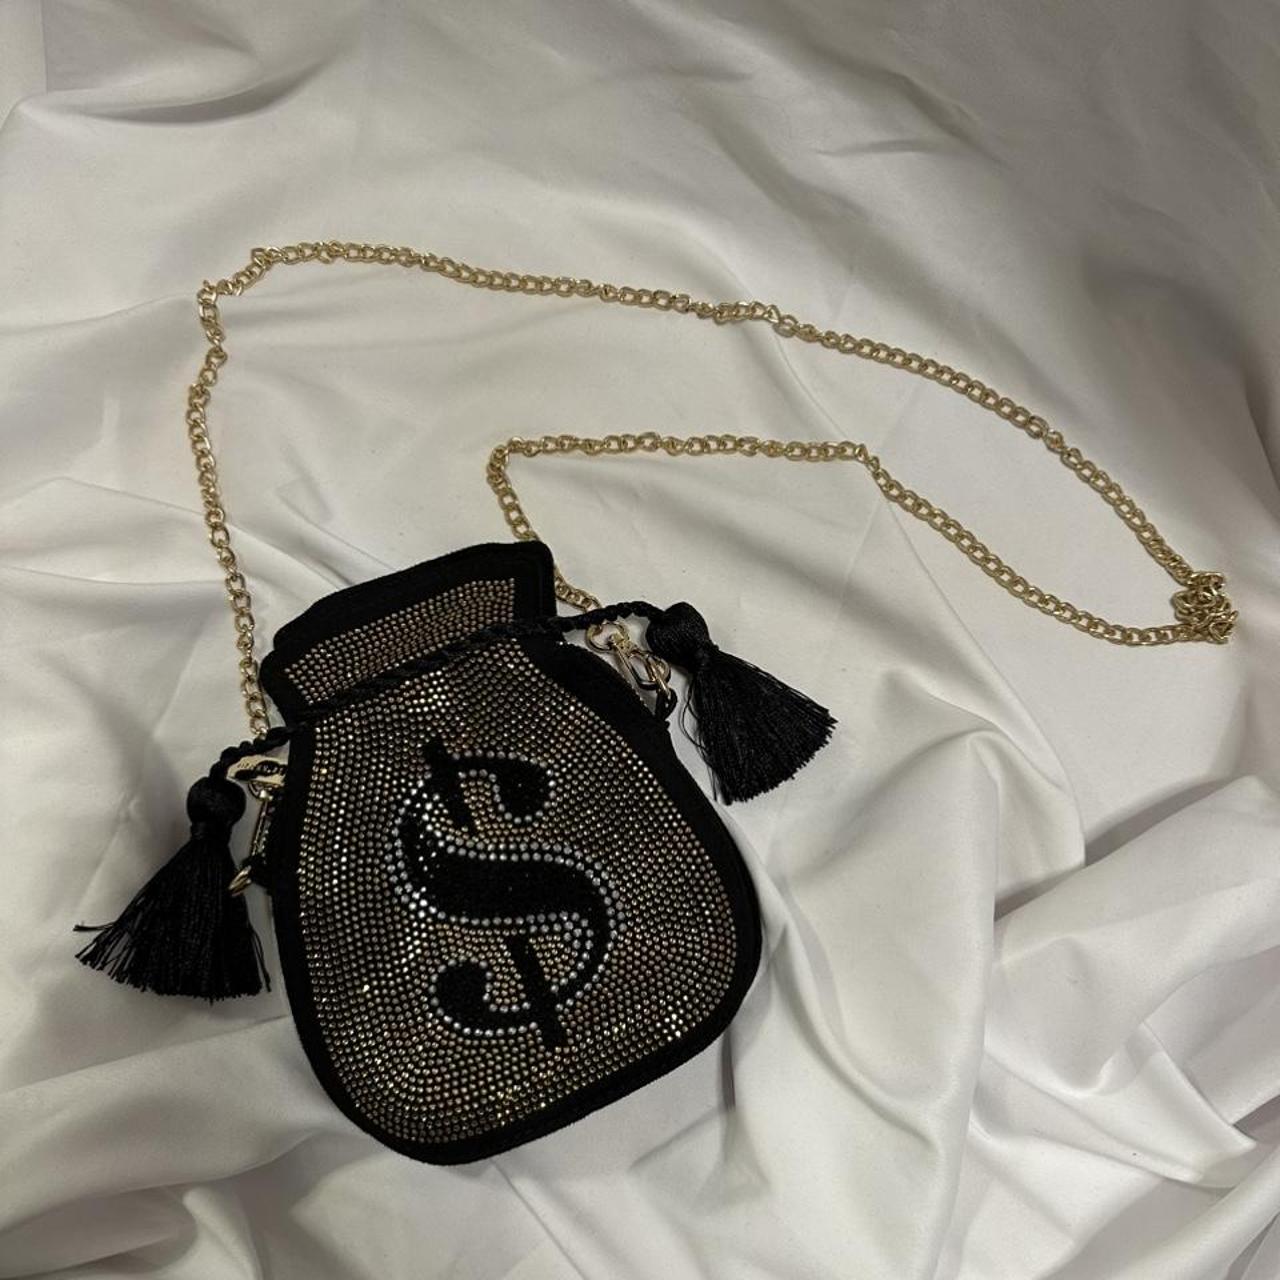 Product Image 1 - Gold and black rhinestone bag.